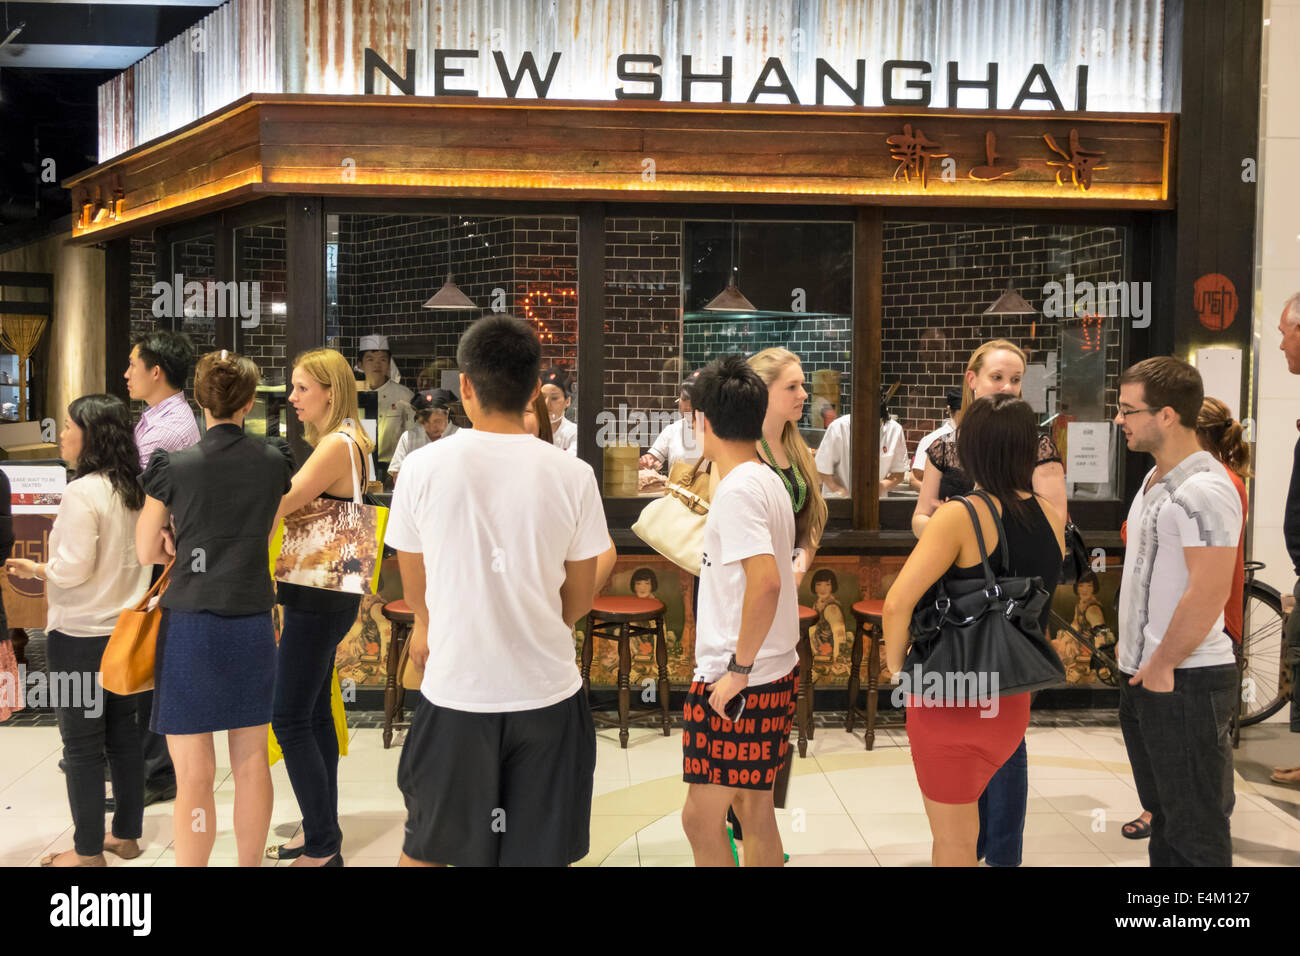 Brisbane Australia,Queen Street Mall,New Shanghai,restaurant restaurants food dining cafe cafes,line,queue,queuing,customers,popular,waiting,AU1403141 Stock Photo